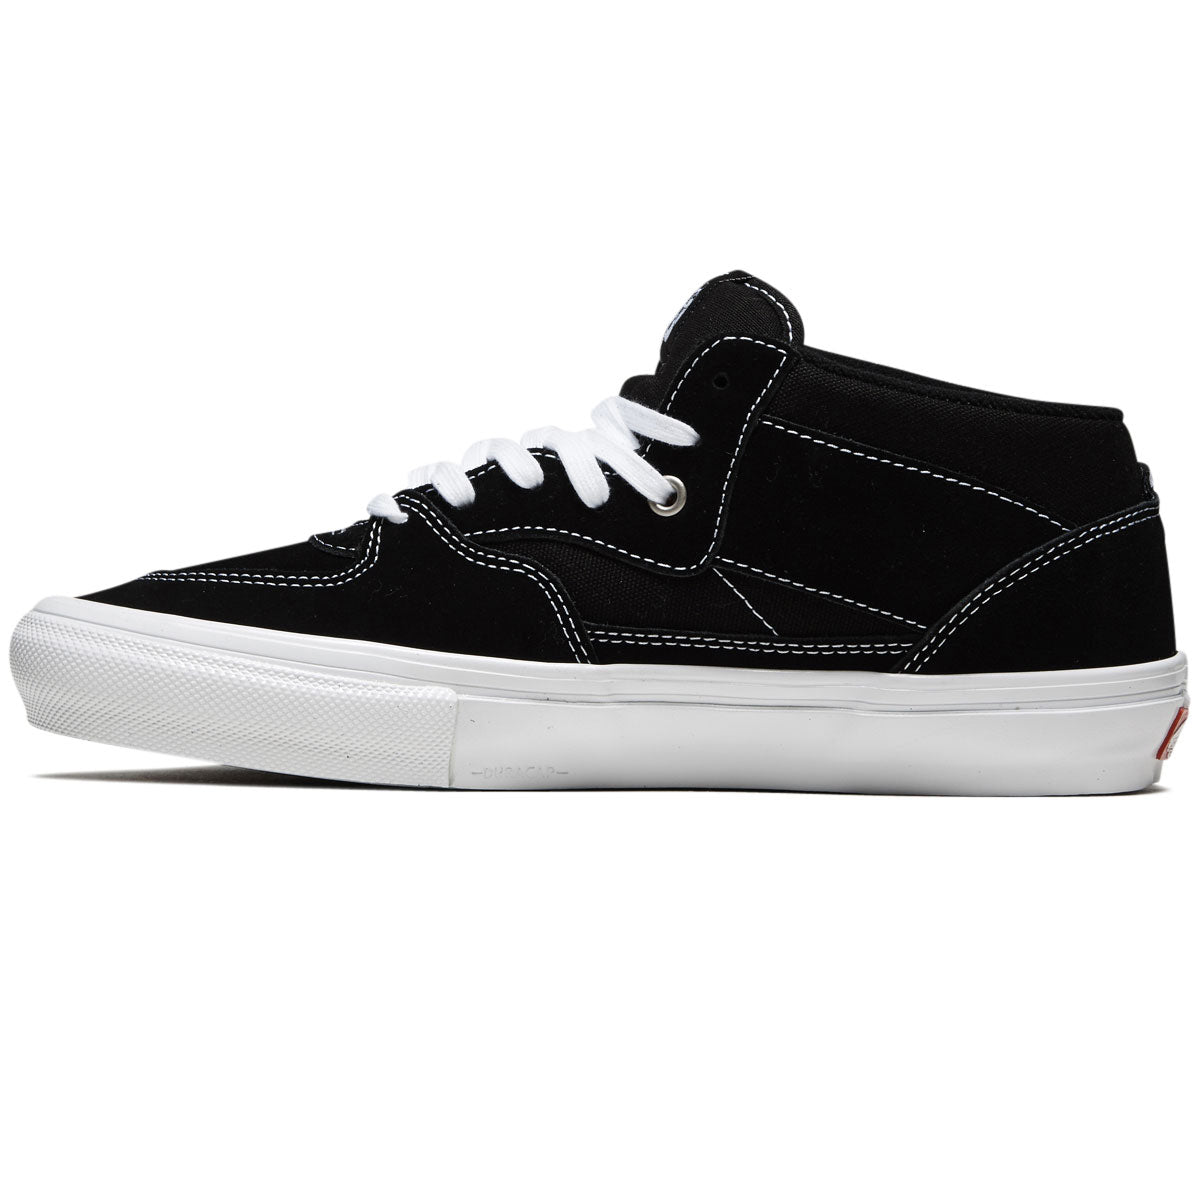 Vans Skate Half Cab Shoes - Black/White image 2